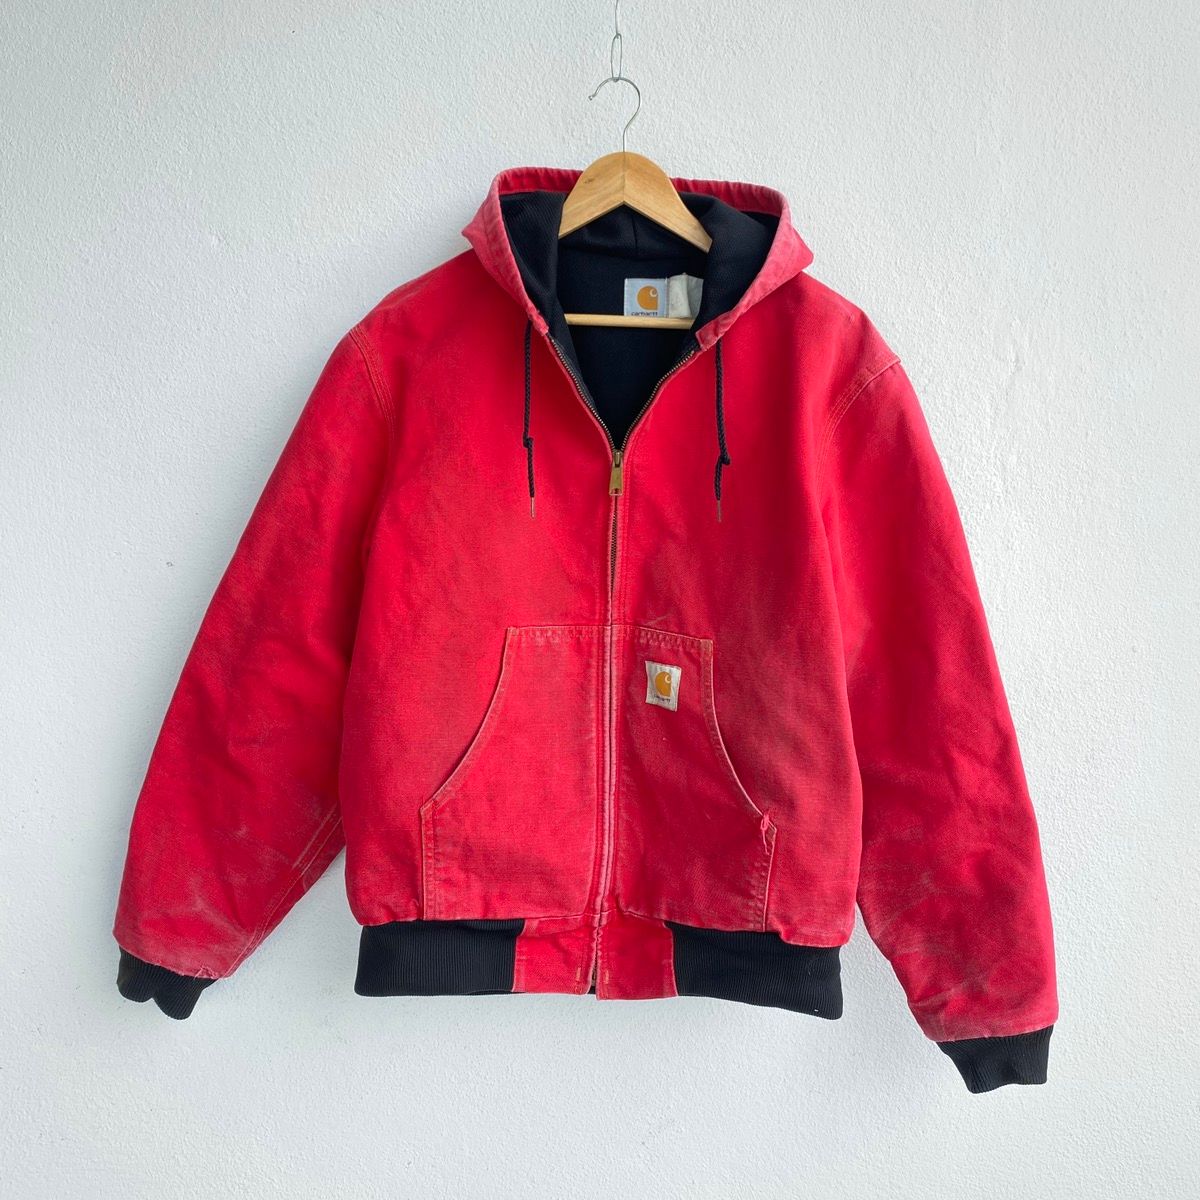 Carhartt Carhartt Hooded Zip Red Jacket Size US M / EU 48-50 / 2 - 1 Preview